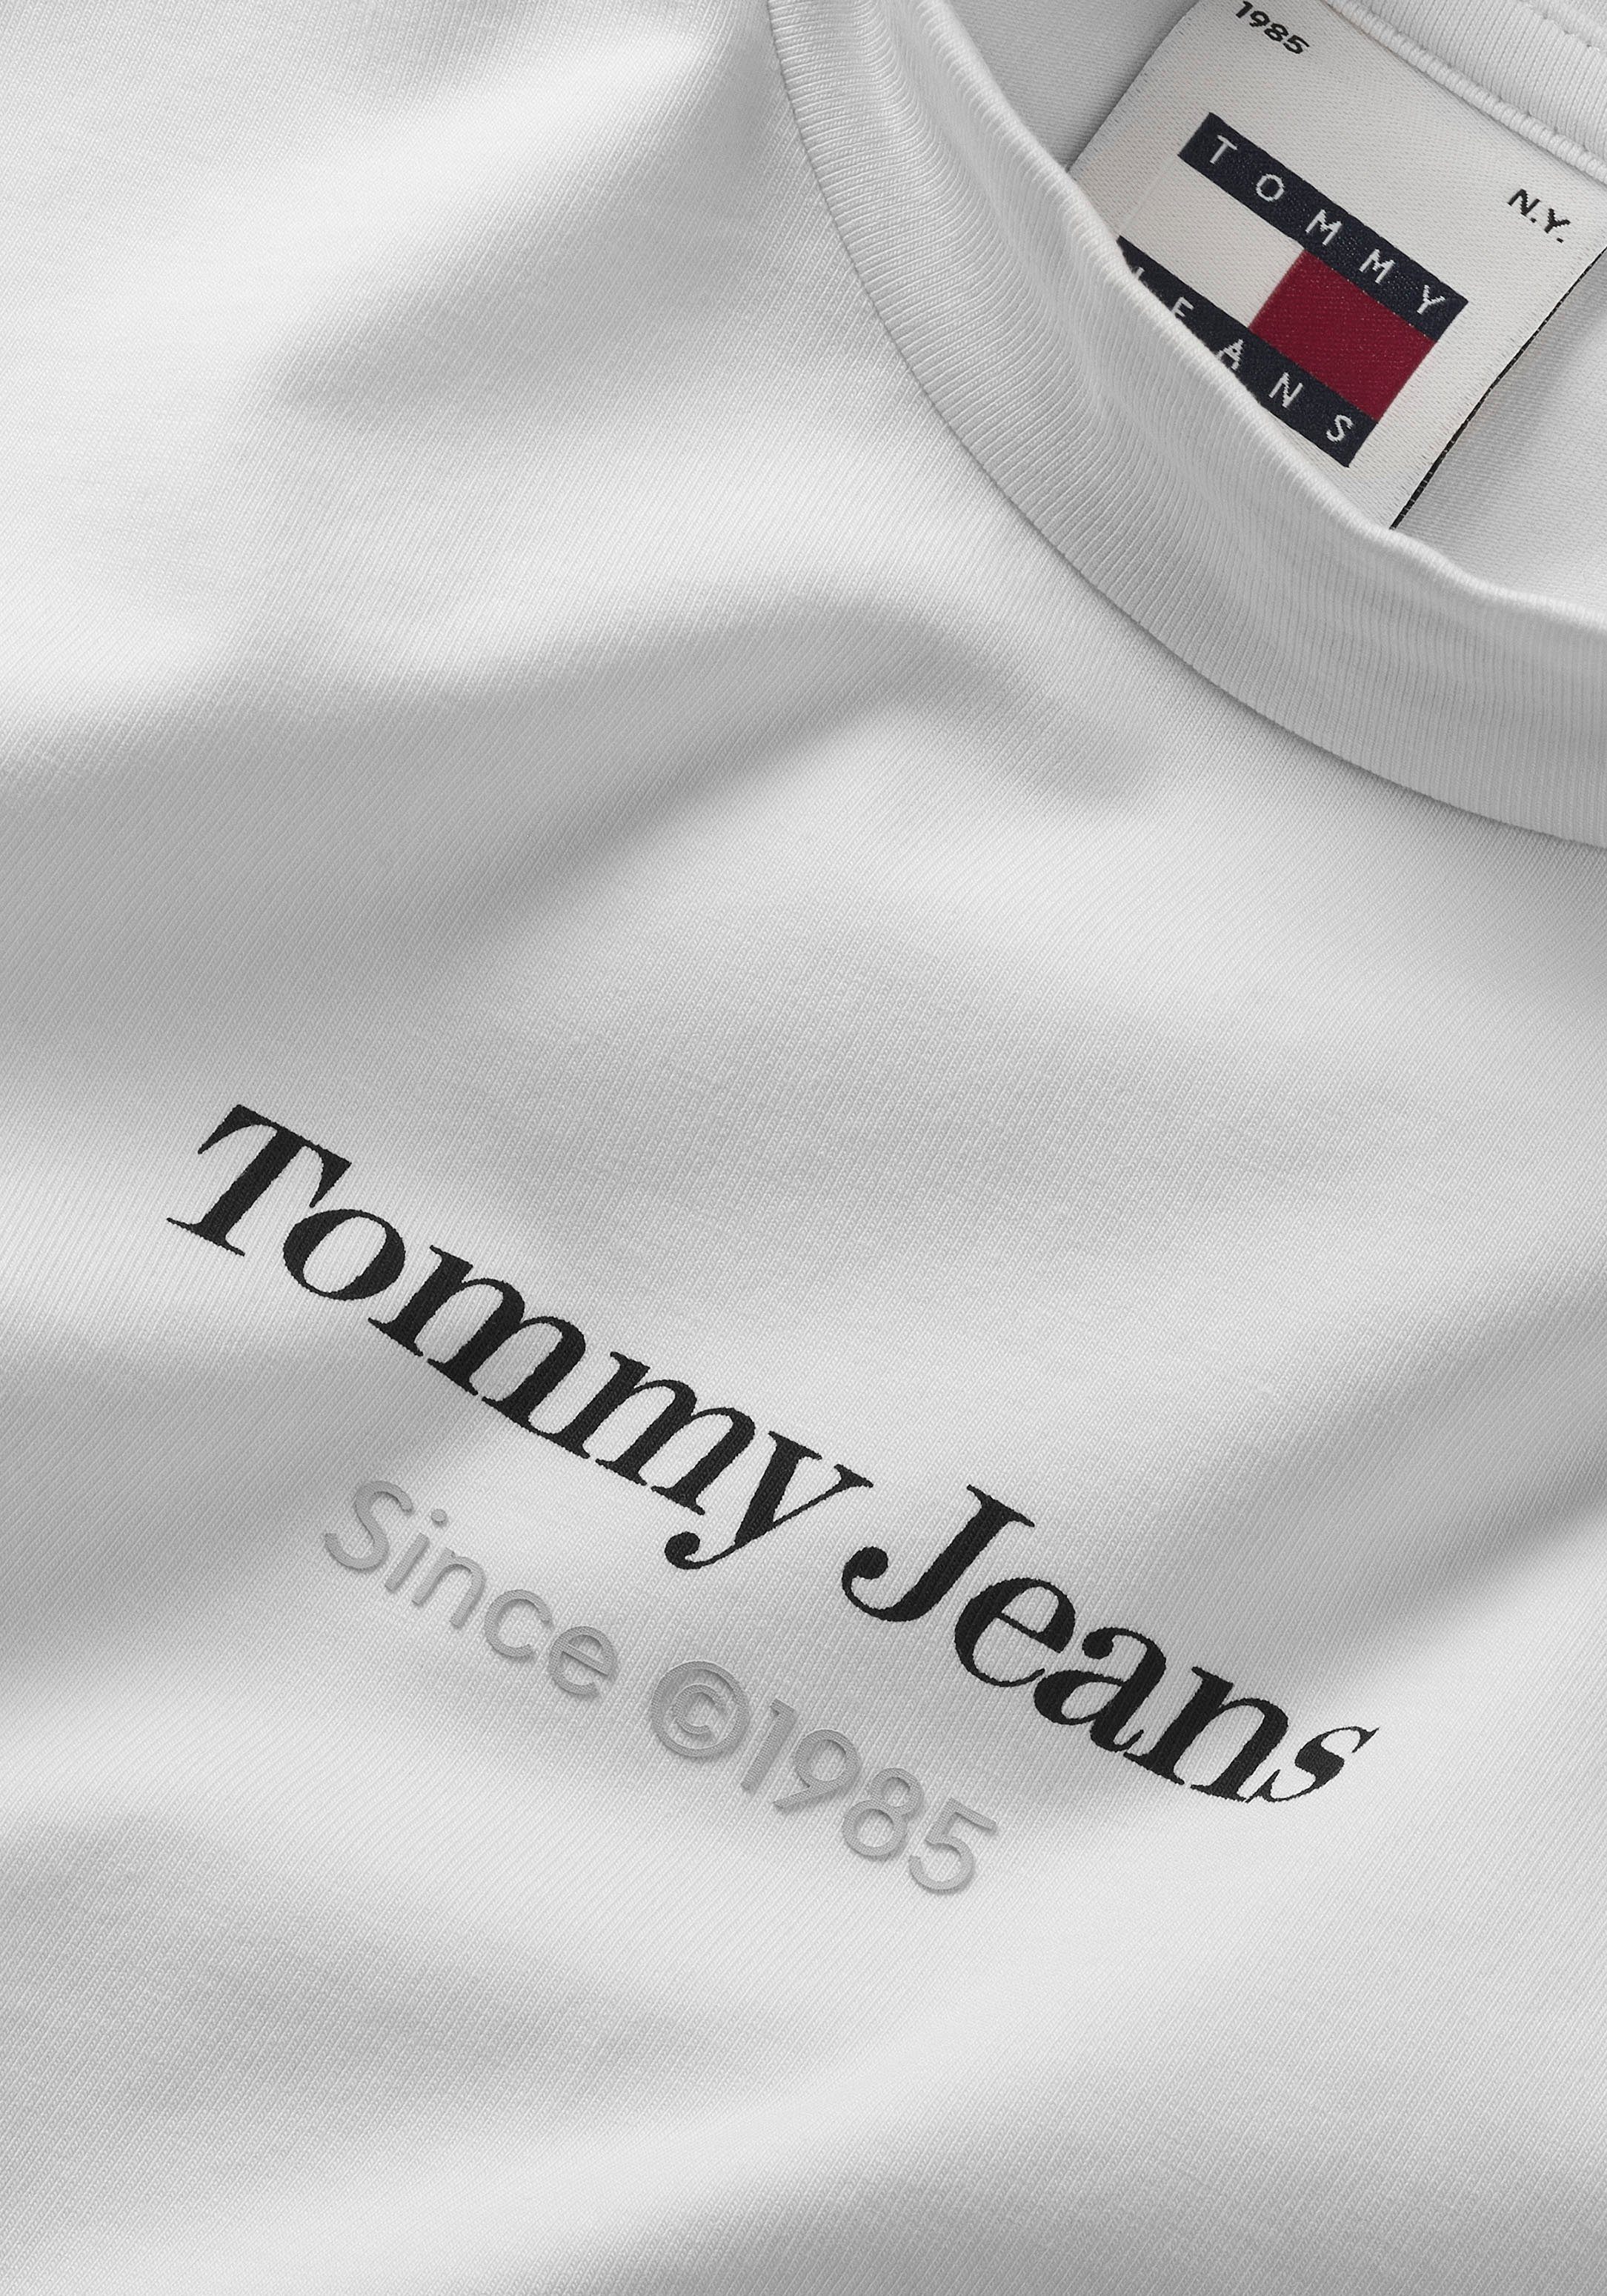 CRP Jeans 1+ MOCK SLIM ESS Stehkragenshirt SP Tommy LOGO TJW Logoschriftzug mit White